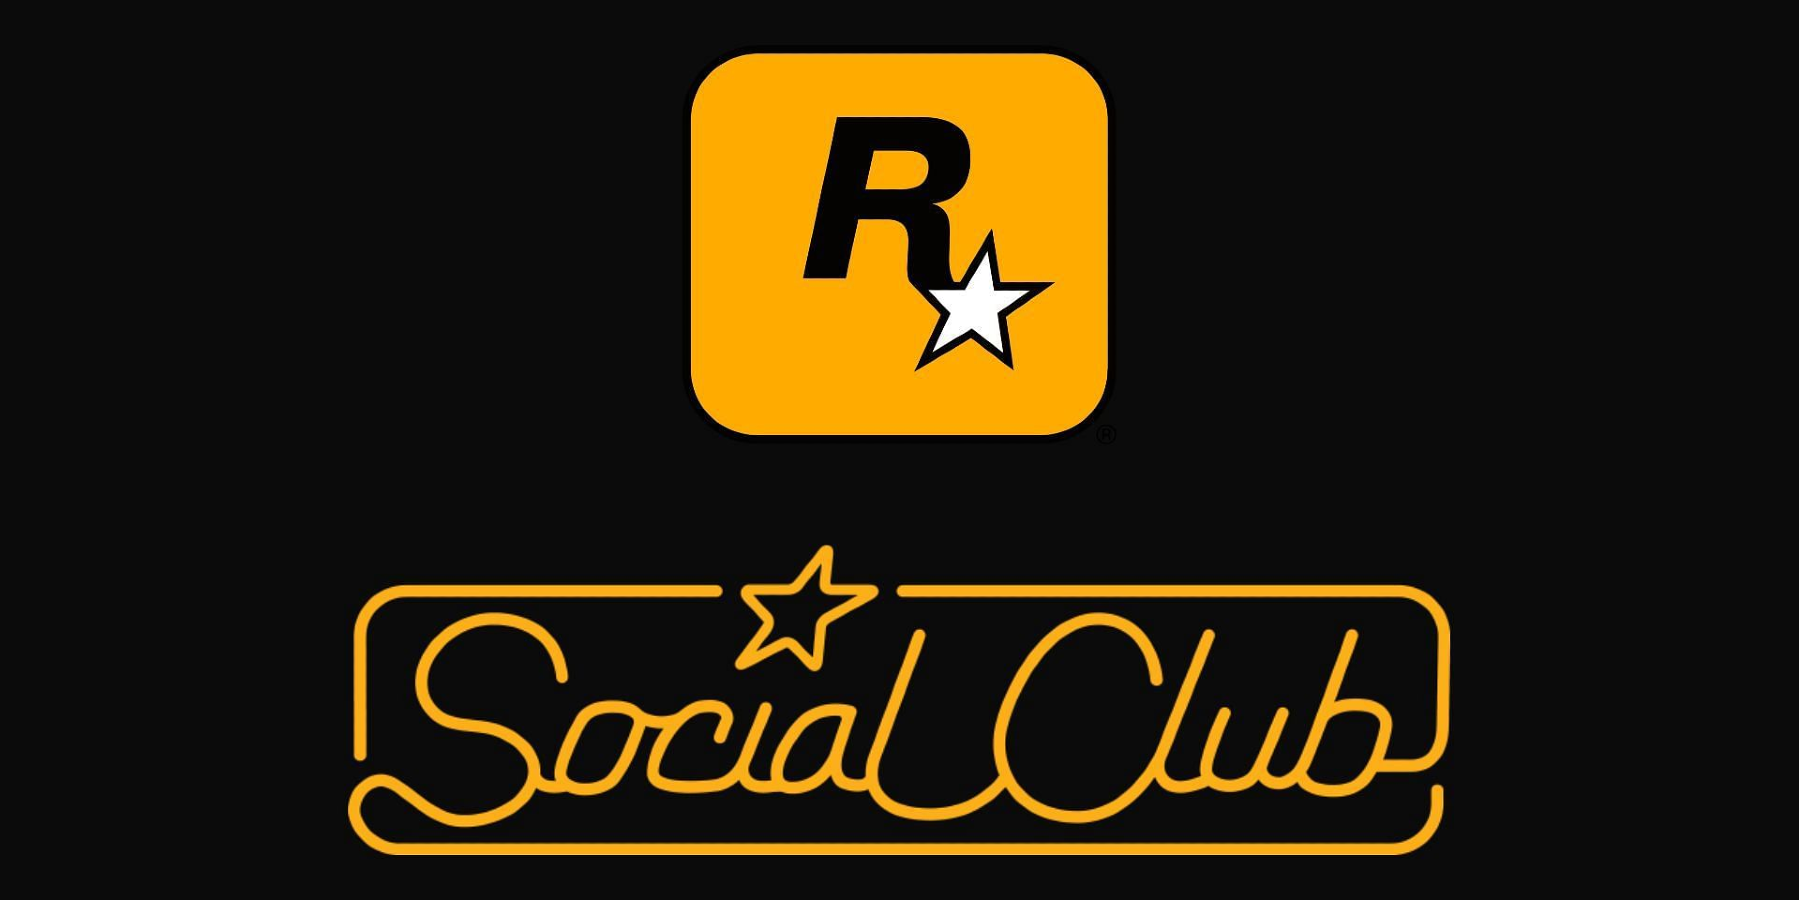 Rockstar Drops Social Club Branding in Lead-Up to GTA 6